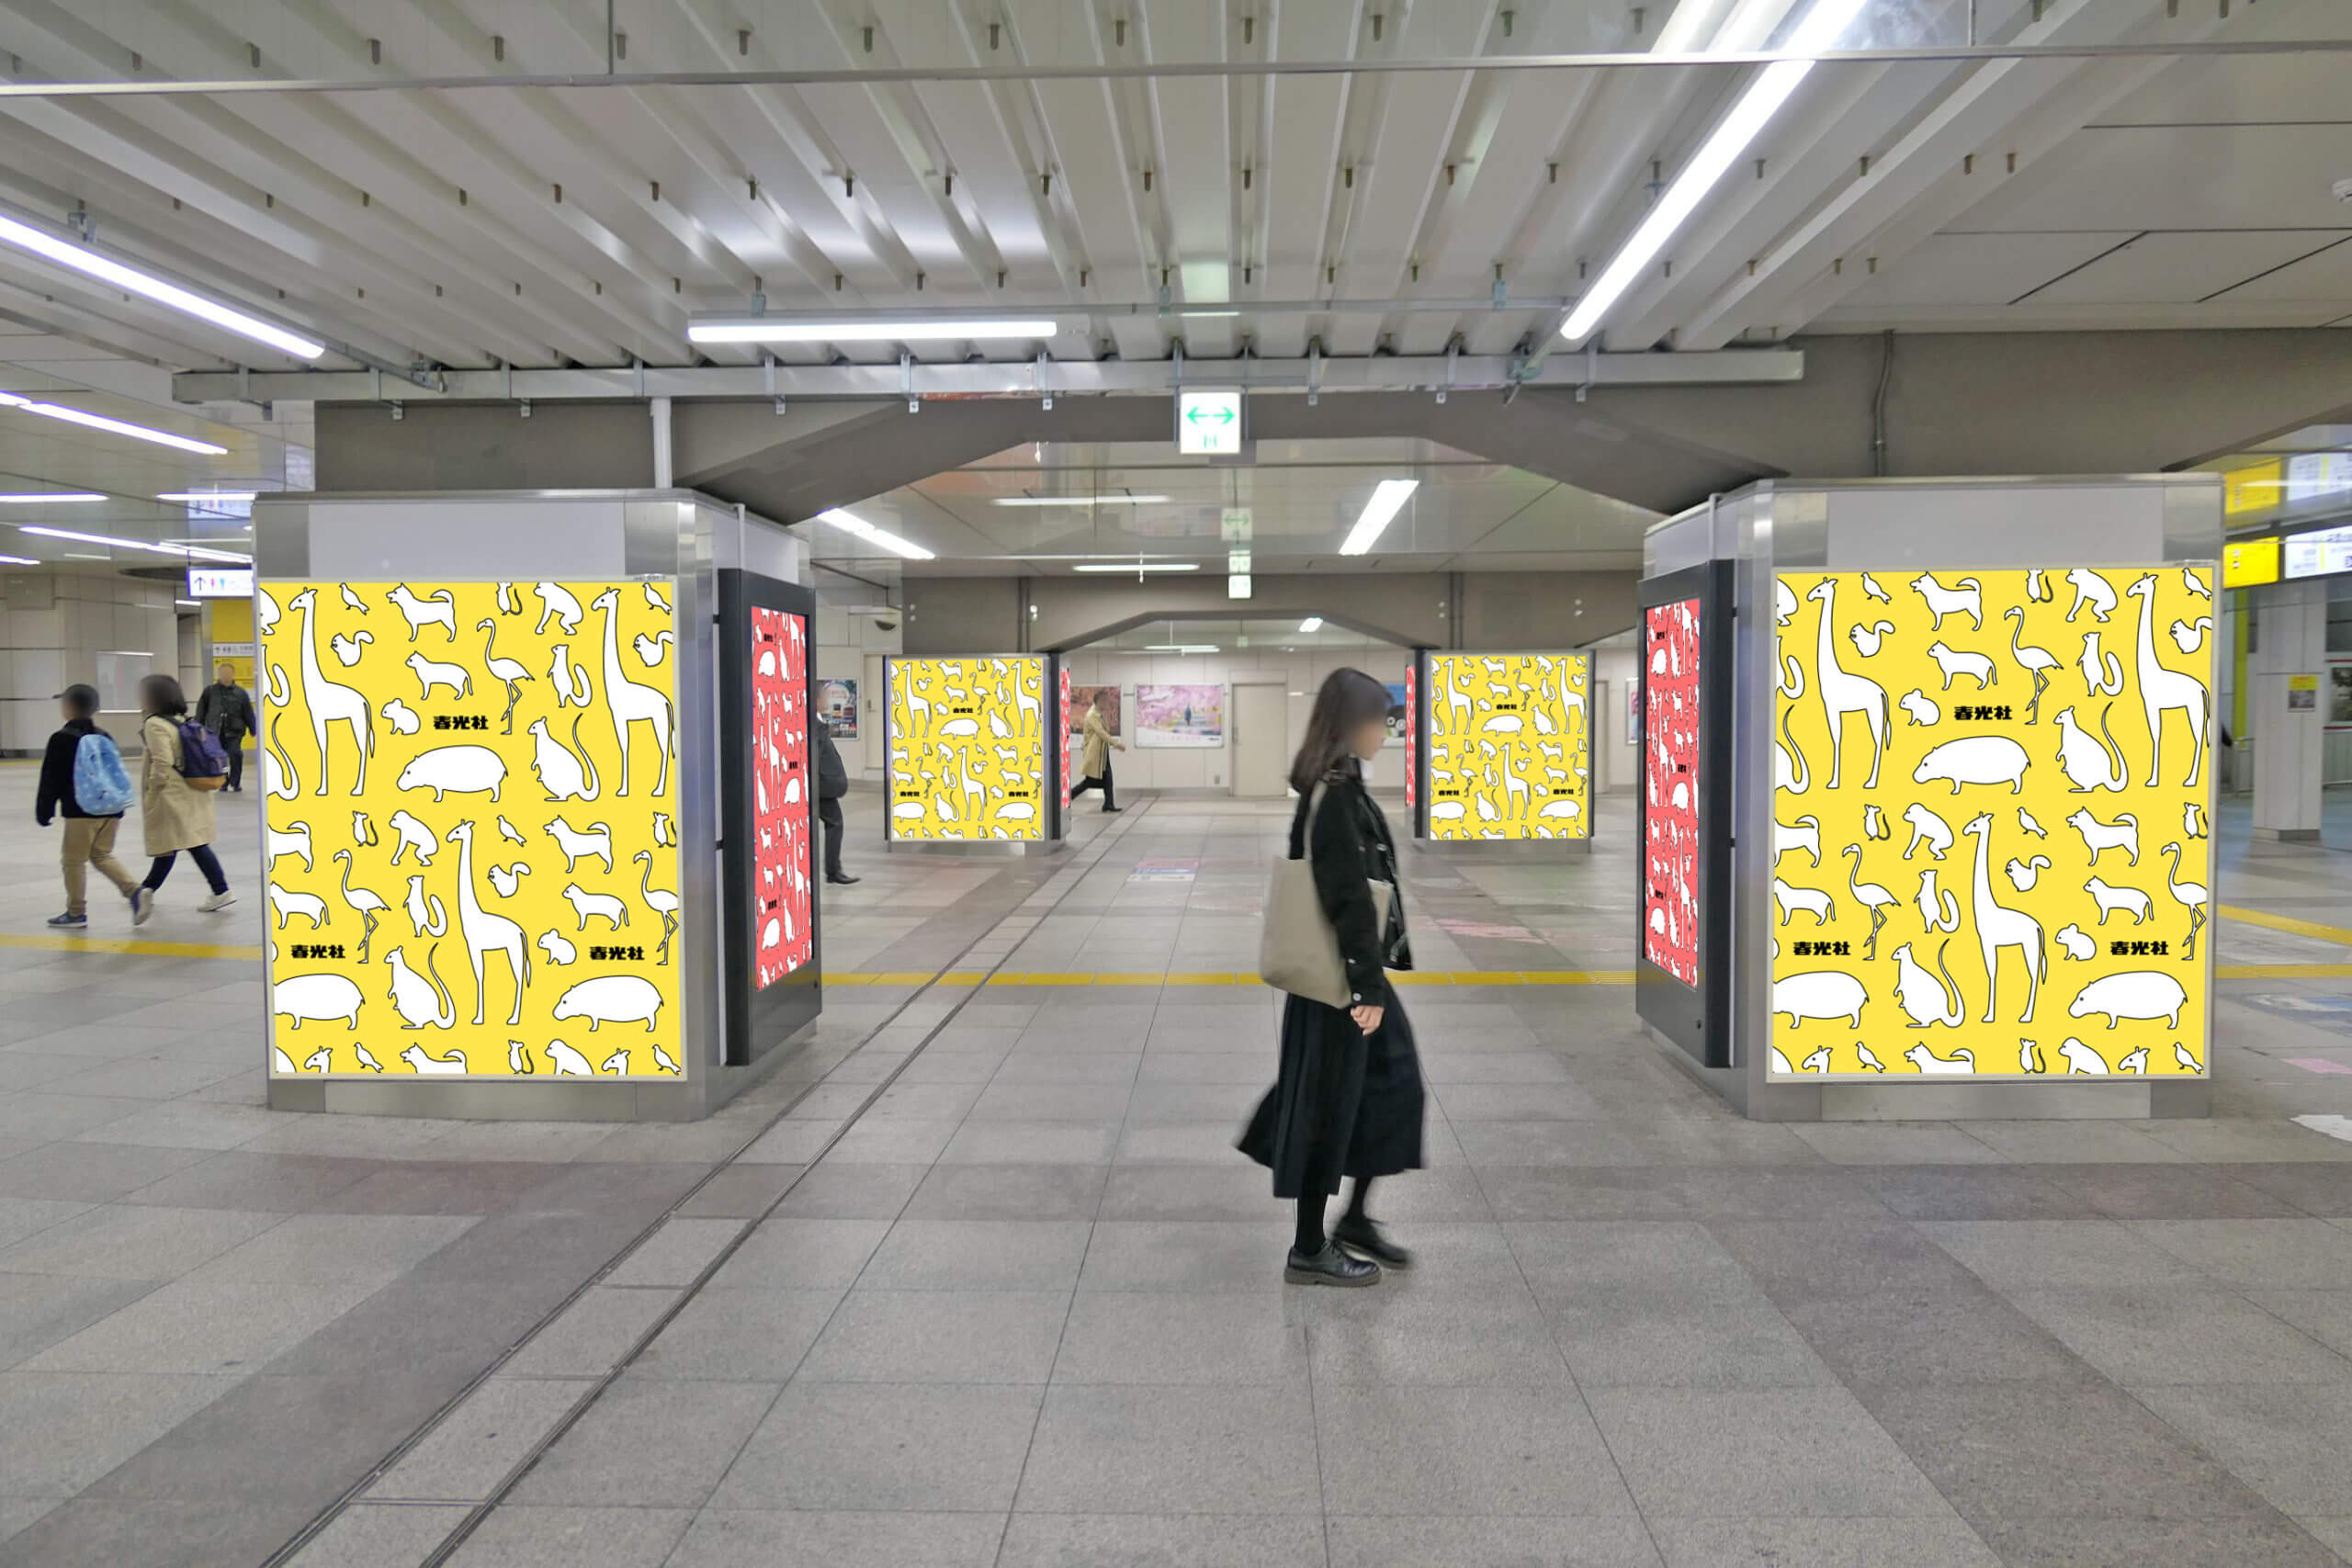 JR東日本秋葉原駅電気街口改札内に設置されている縦型デジタルサイネージとシート